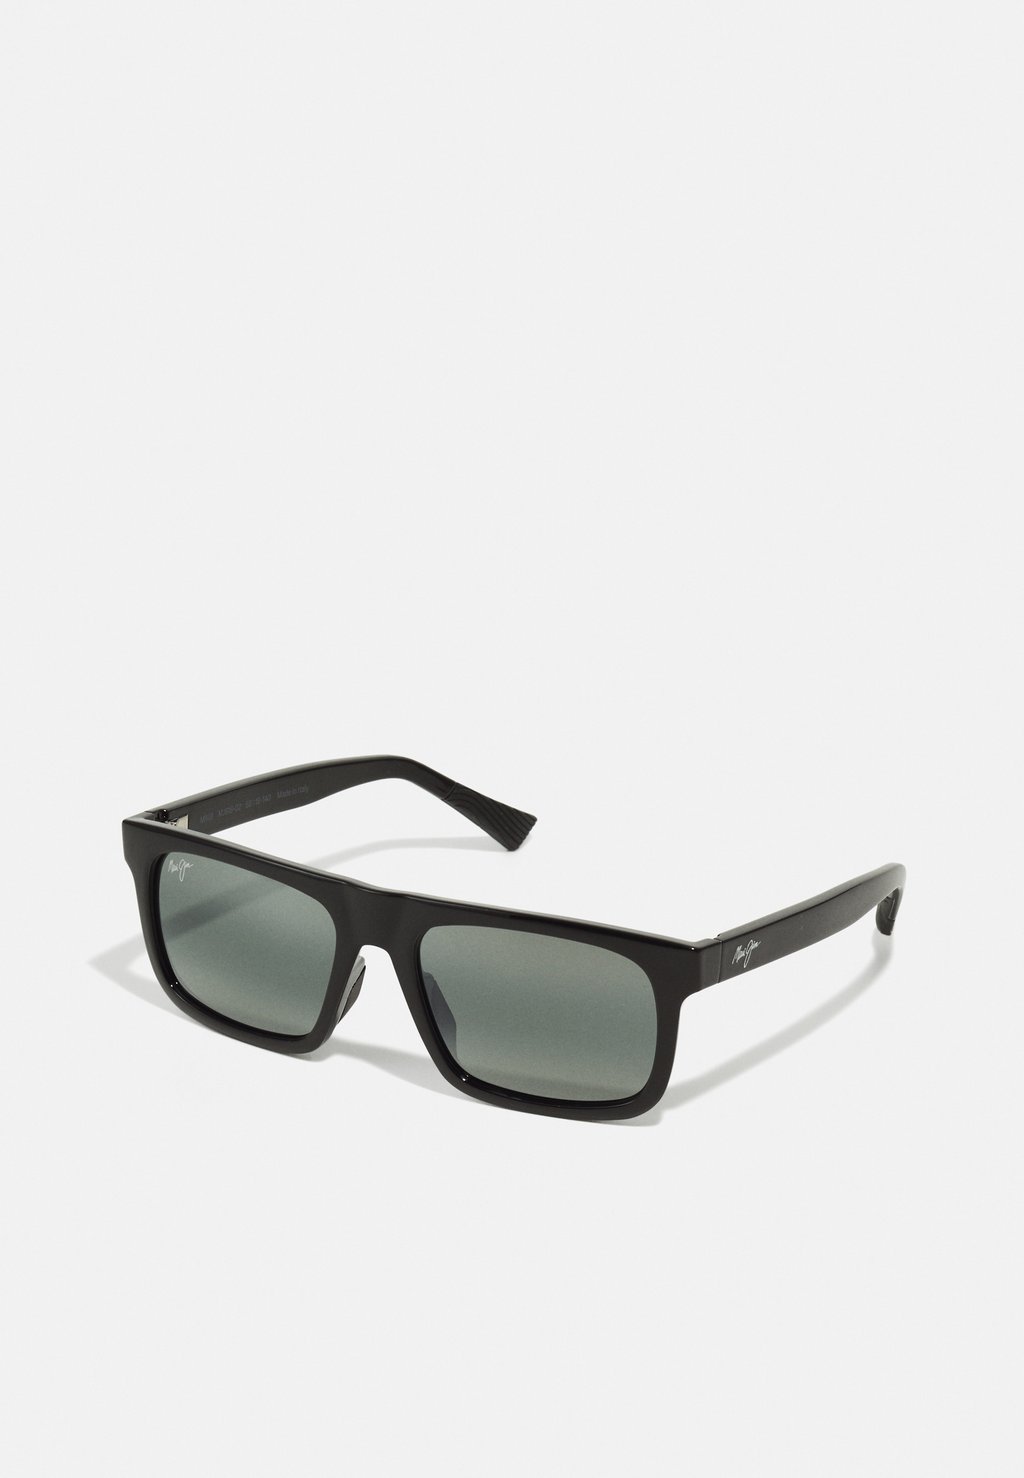 Солнцезащитные очки Maui Jim, цвет black/grey солнцезащитные очки nuu landing maui jim цвет black gloss black rubber neutral grey polarized